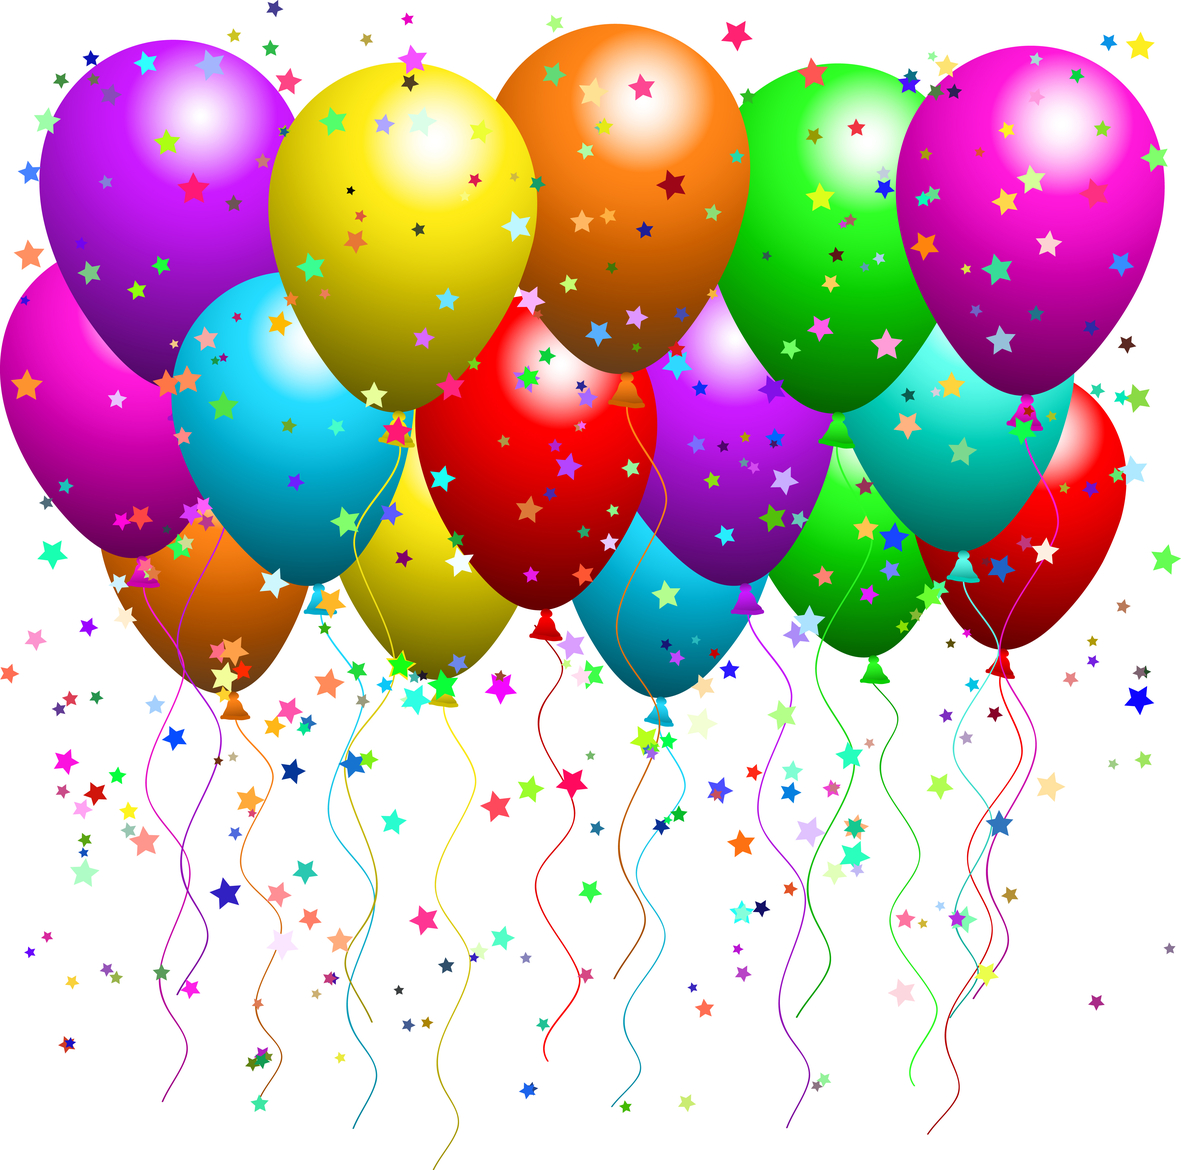 https://blogger.googleusercontent.com/img/b/R29vZ2xl/AVvXsEimnmbUJI6Y4IdaPCmGUCbF40UvH4c4JDZJ20Gi1wwvfIIpNbIZL3ZrInCfGuQ7nck3KeO5ybmSP4Frwk8aKT0jORSmUZHT1BRBwjYCPlm6RbD8XtTMZBTooAj8ZYb9XImkf8V-PM3zuLU/s1600/Balloons-celebration.jpg